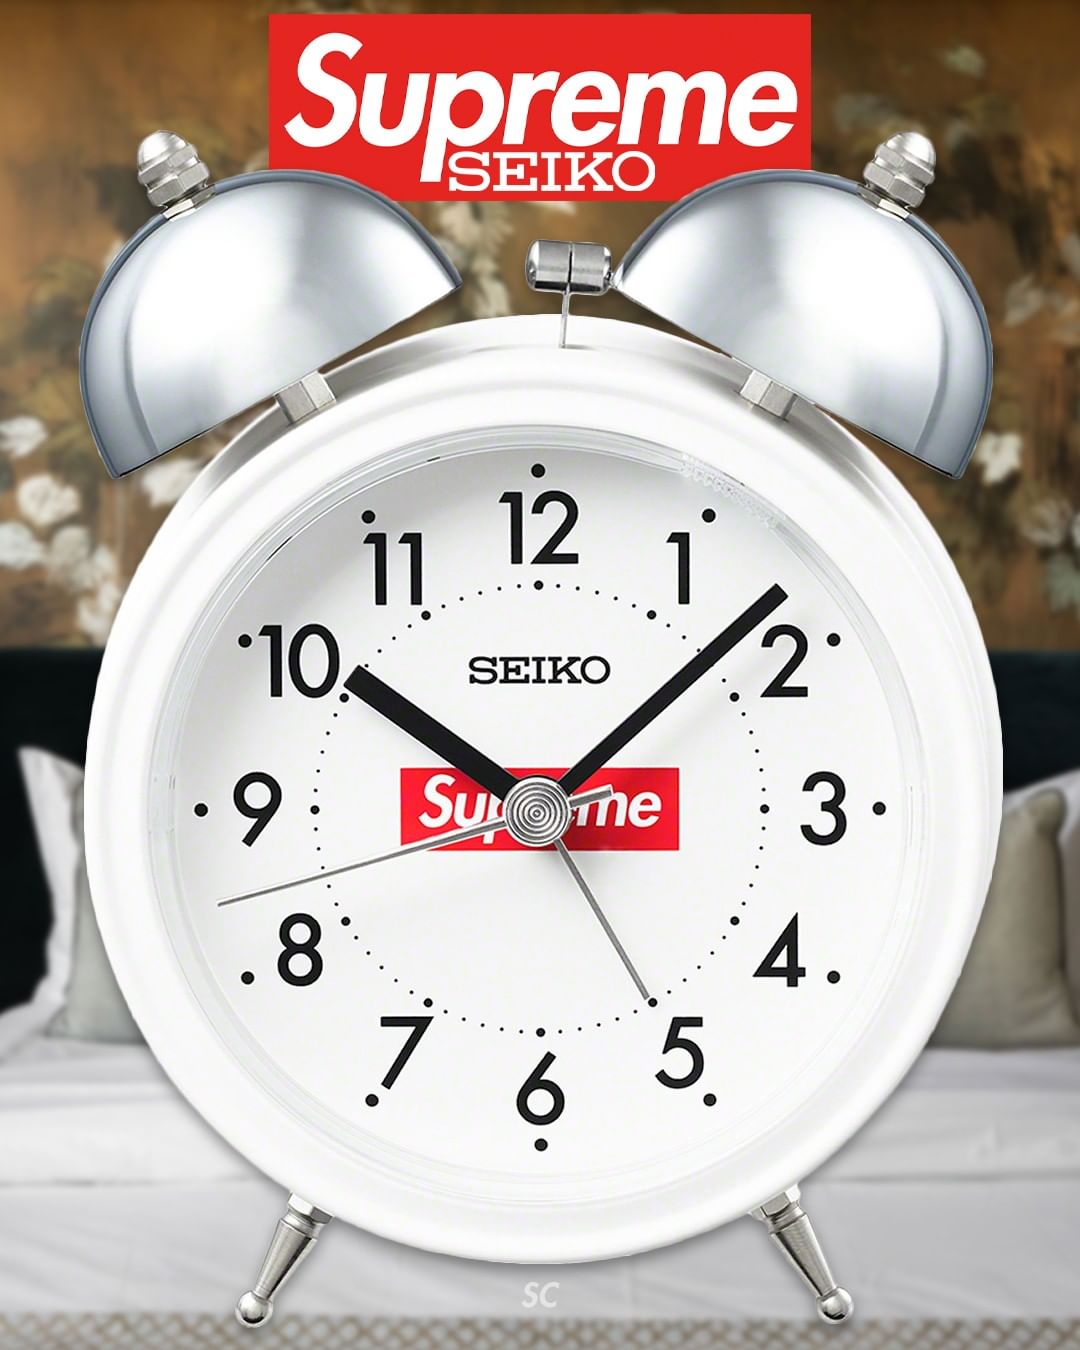 Supreme SEIKO Alarm Clock white